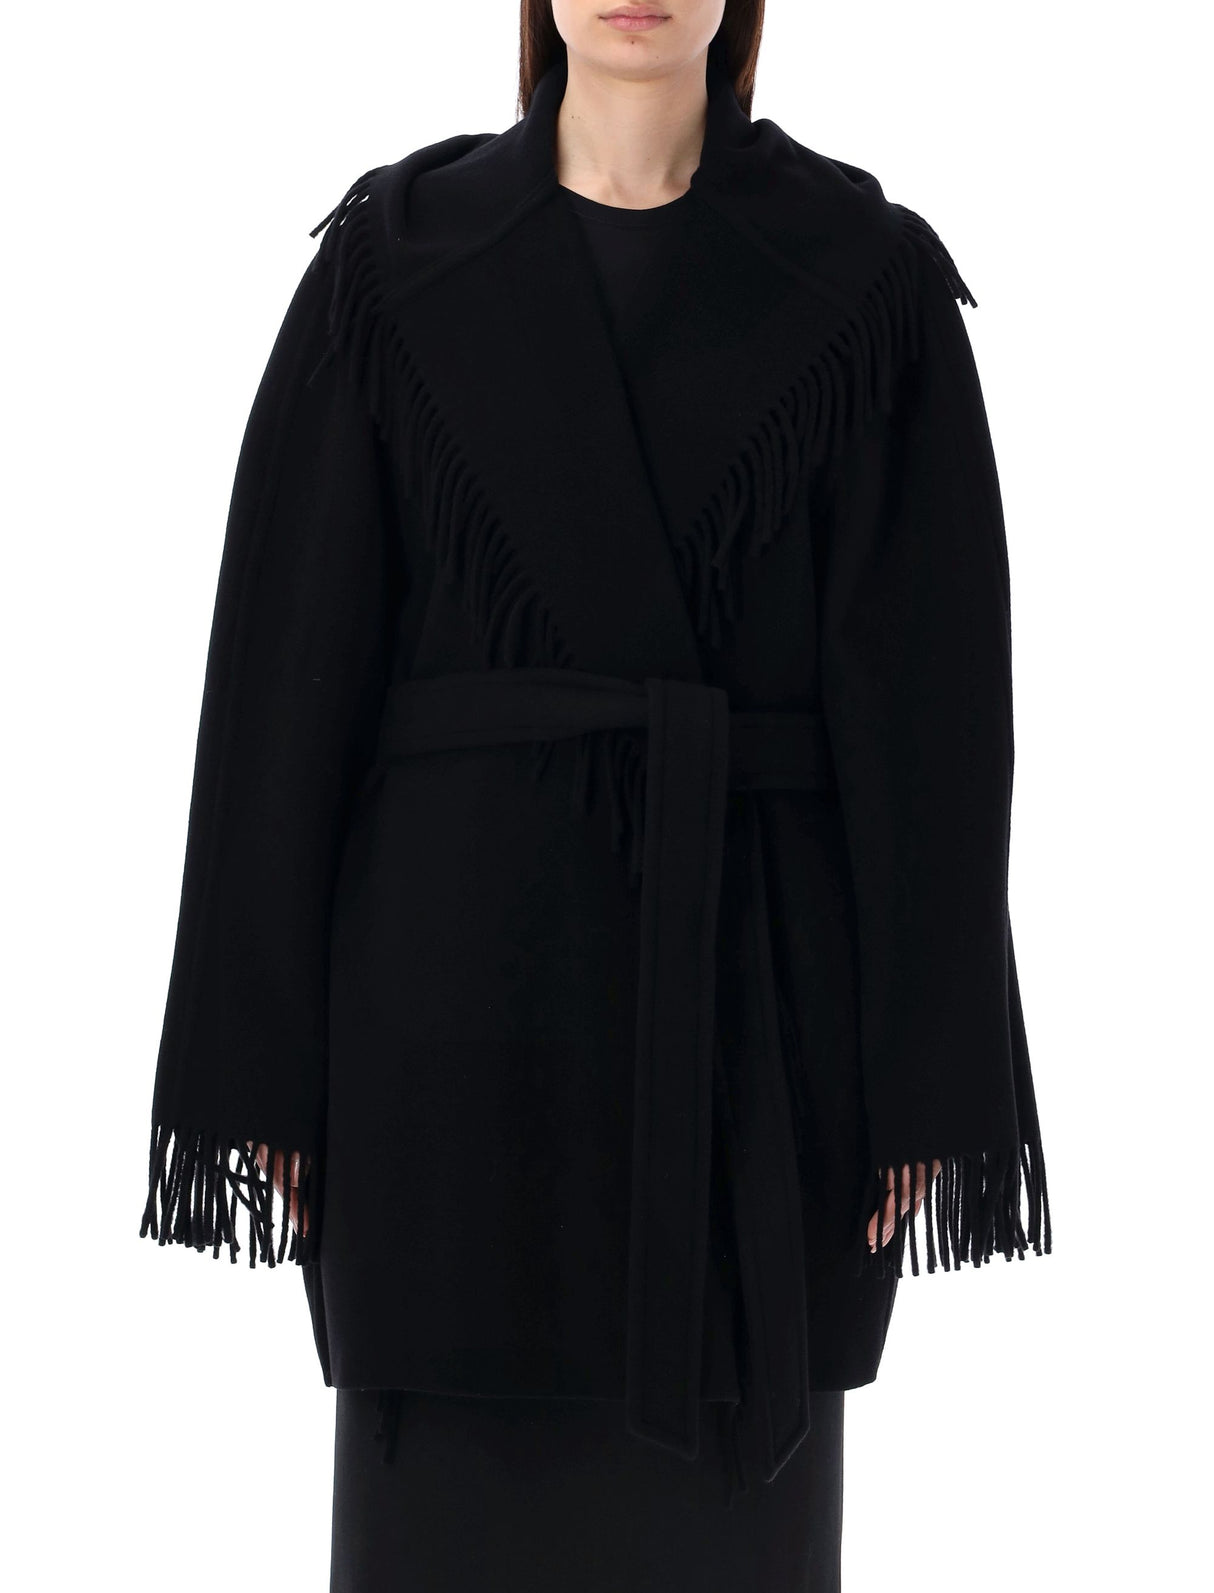 Black Wool Fringed Jacket with Raglan Sleeves and Belt by Balenciaga